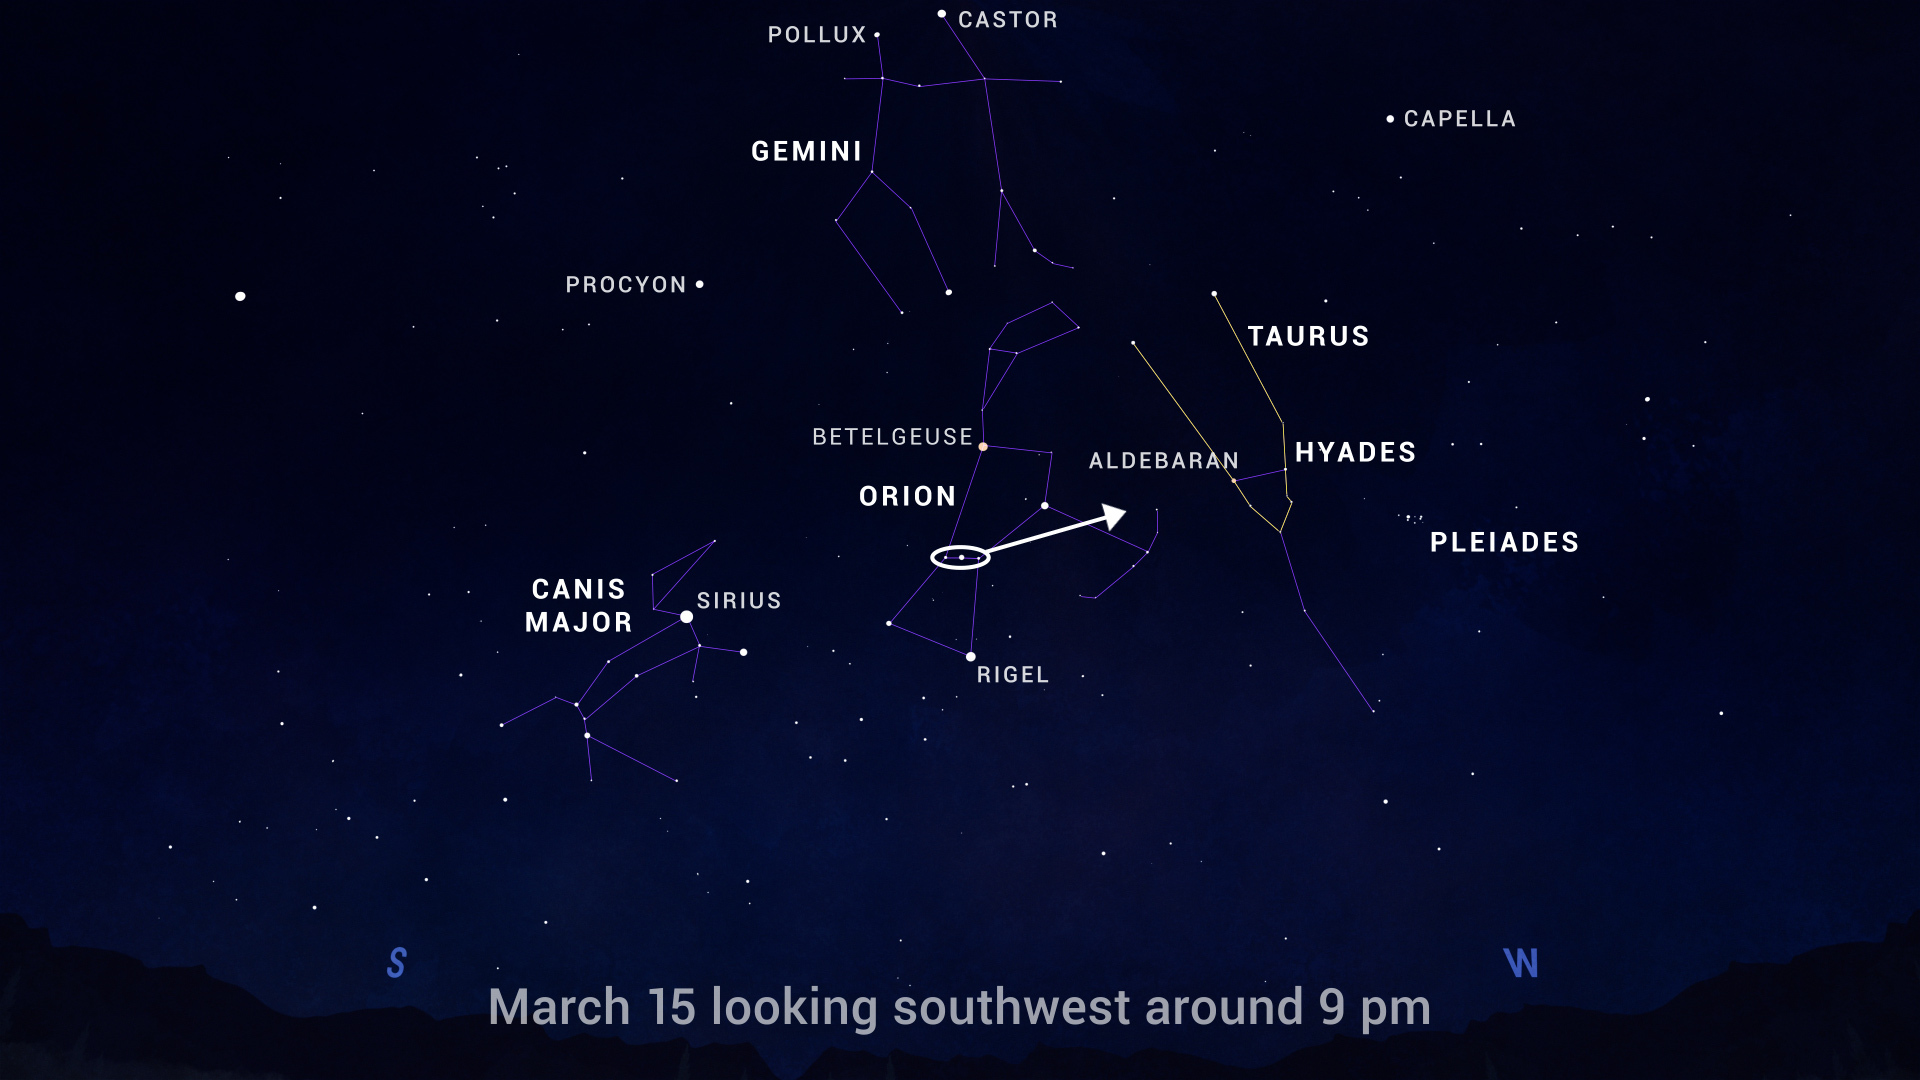 Taurus and Hyades